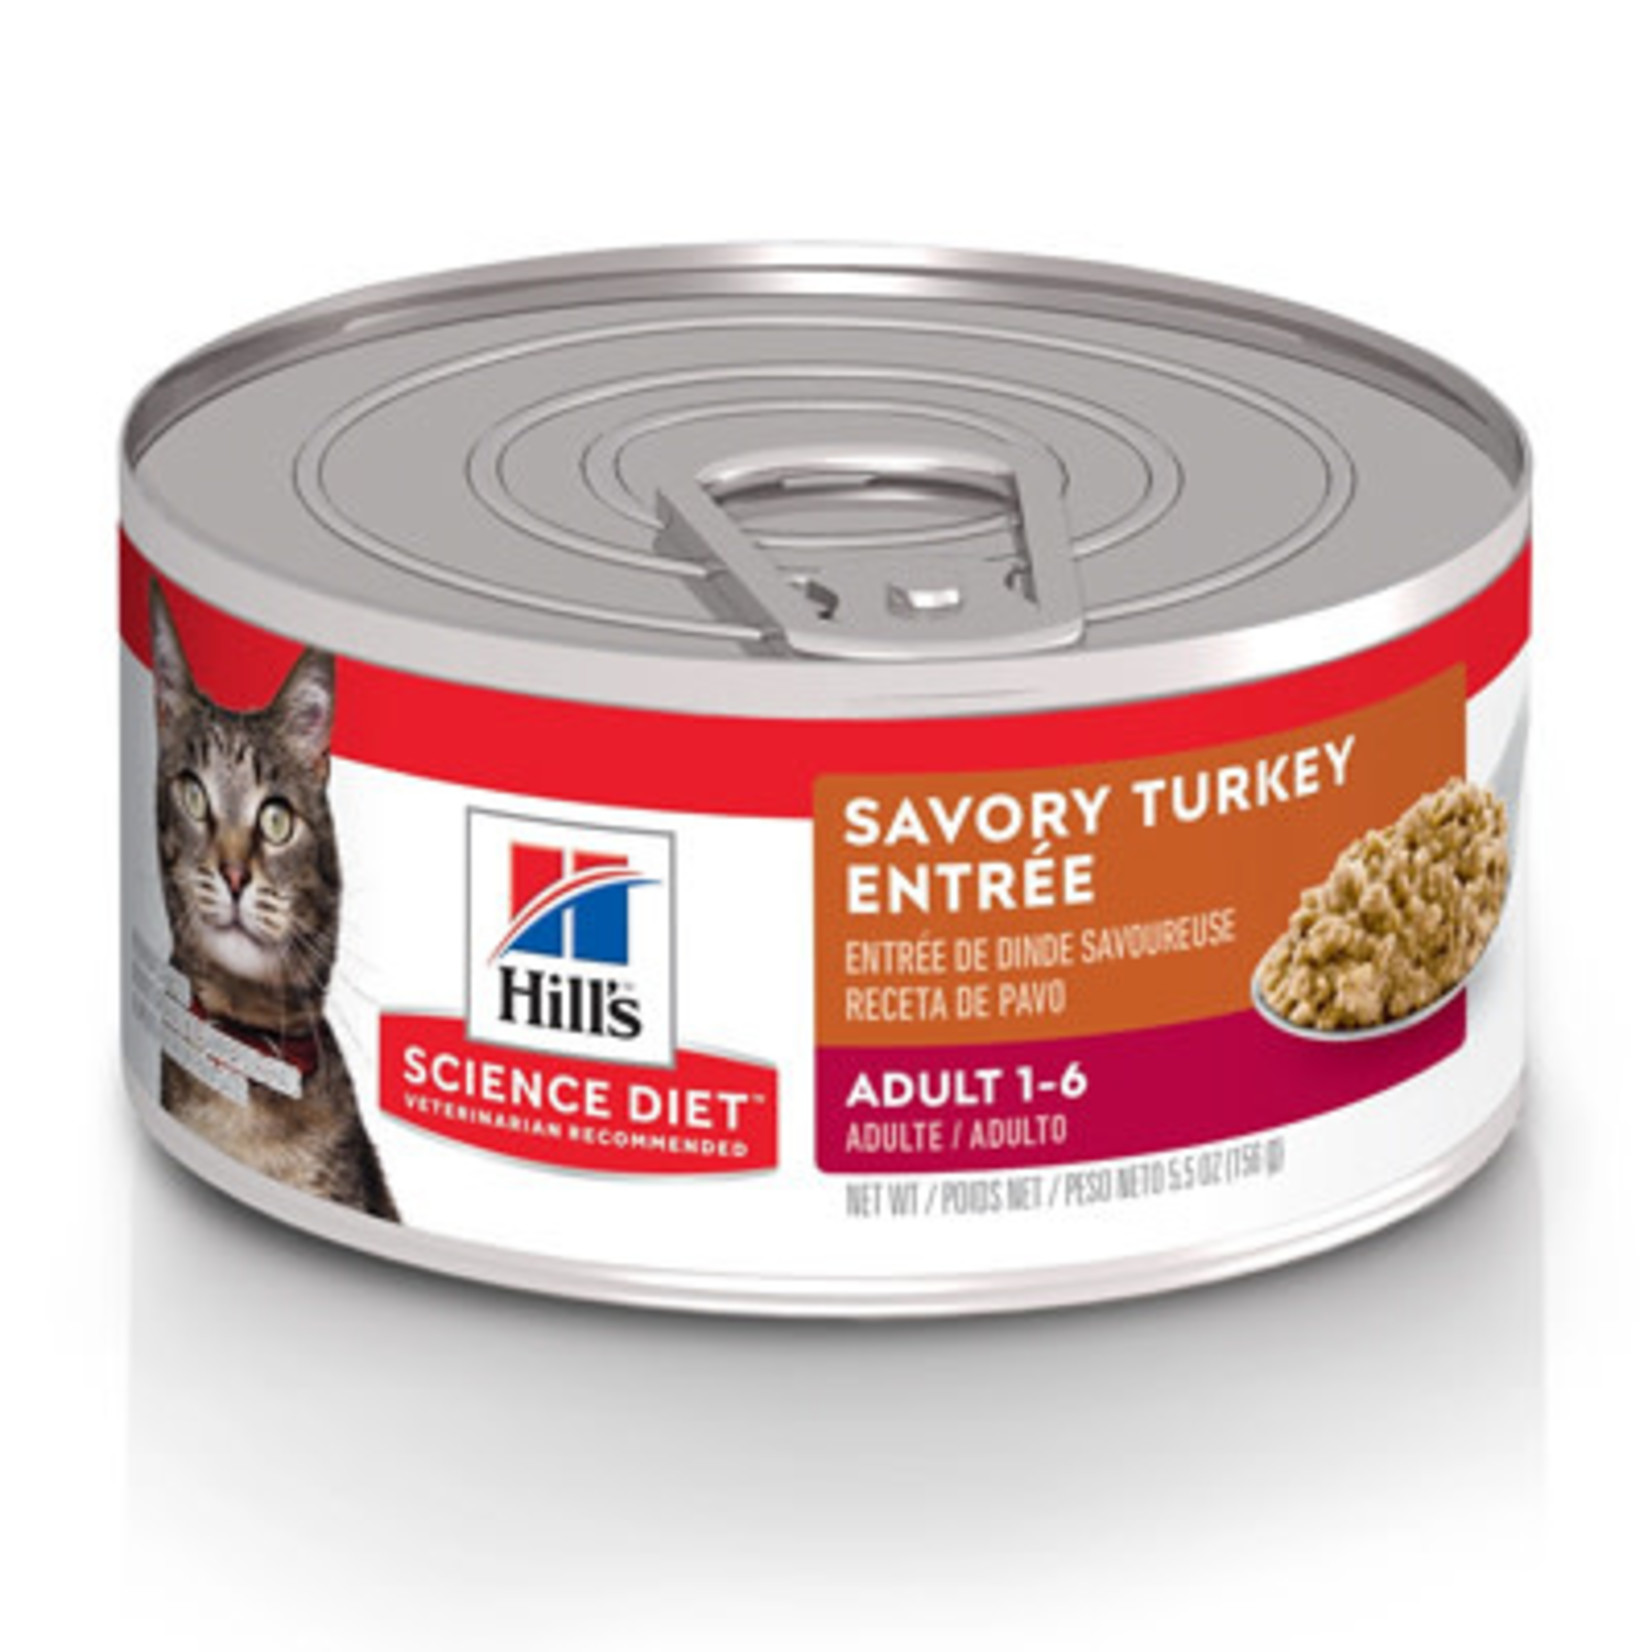 Science Diet Adult 1-6 Savory Turkey Entree Cat 5.5oz Science Diet